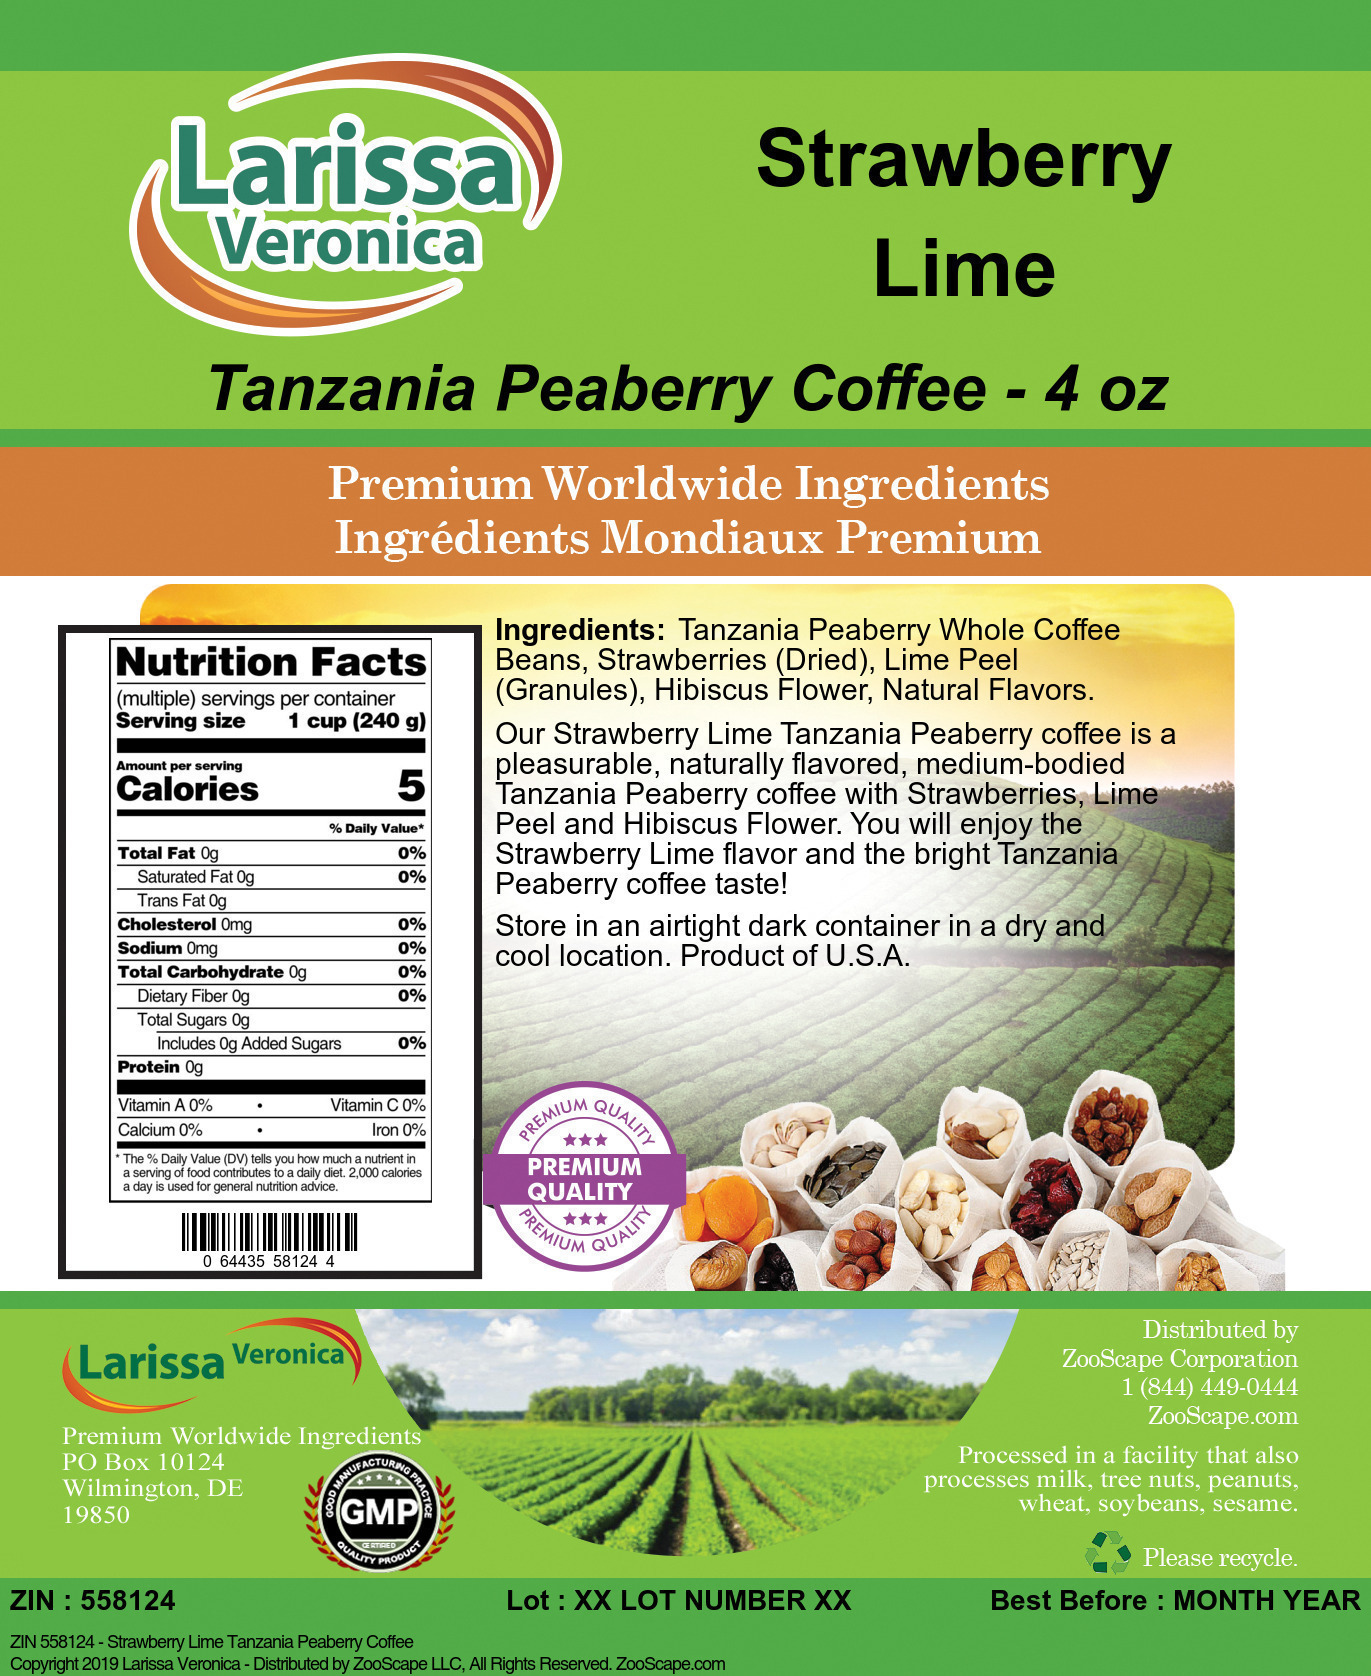 Strawberry Lime Tanzania Peaberry Coffee - Label